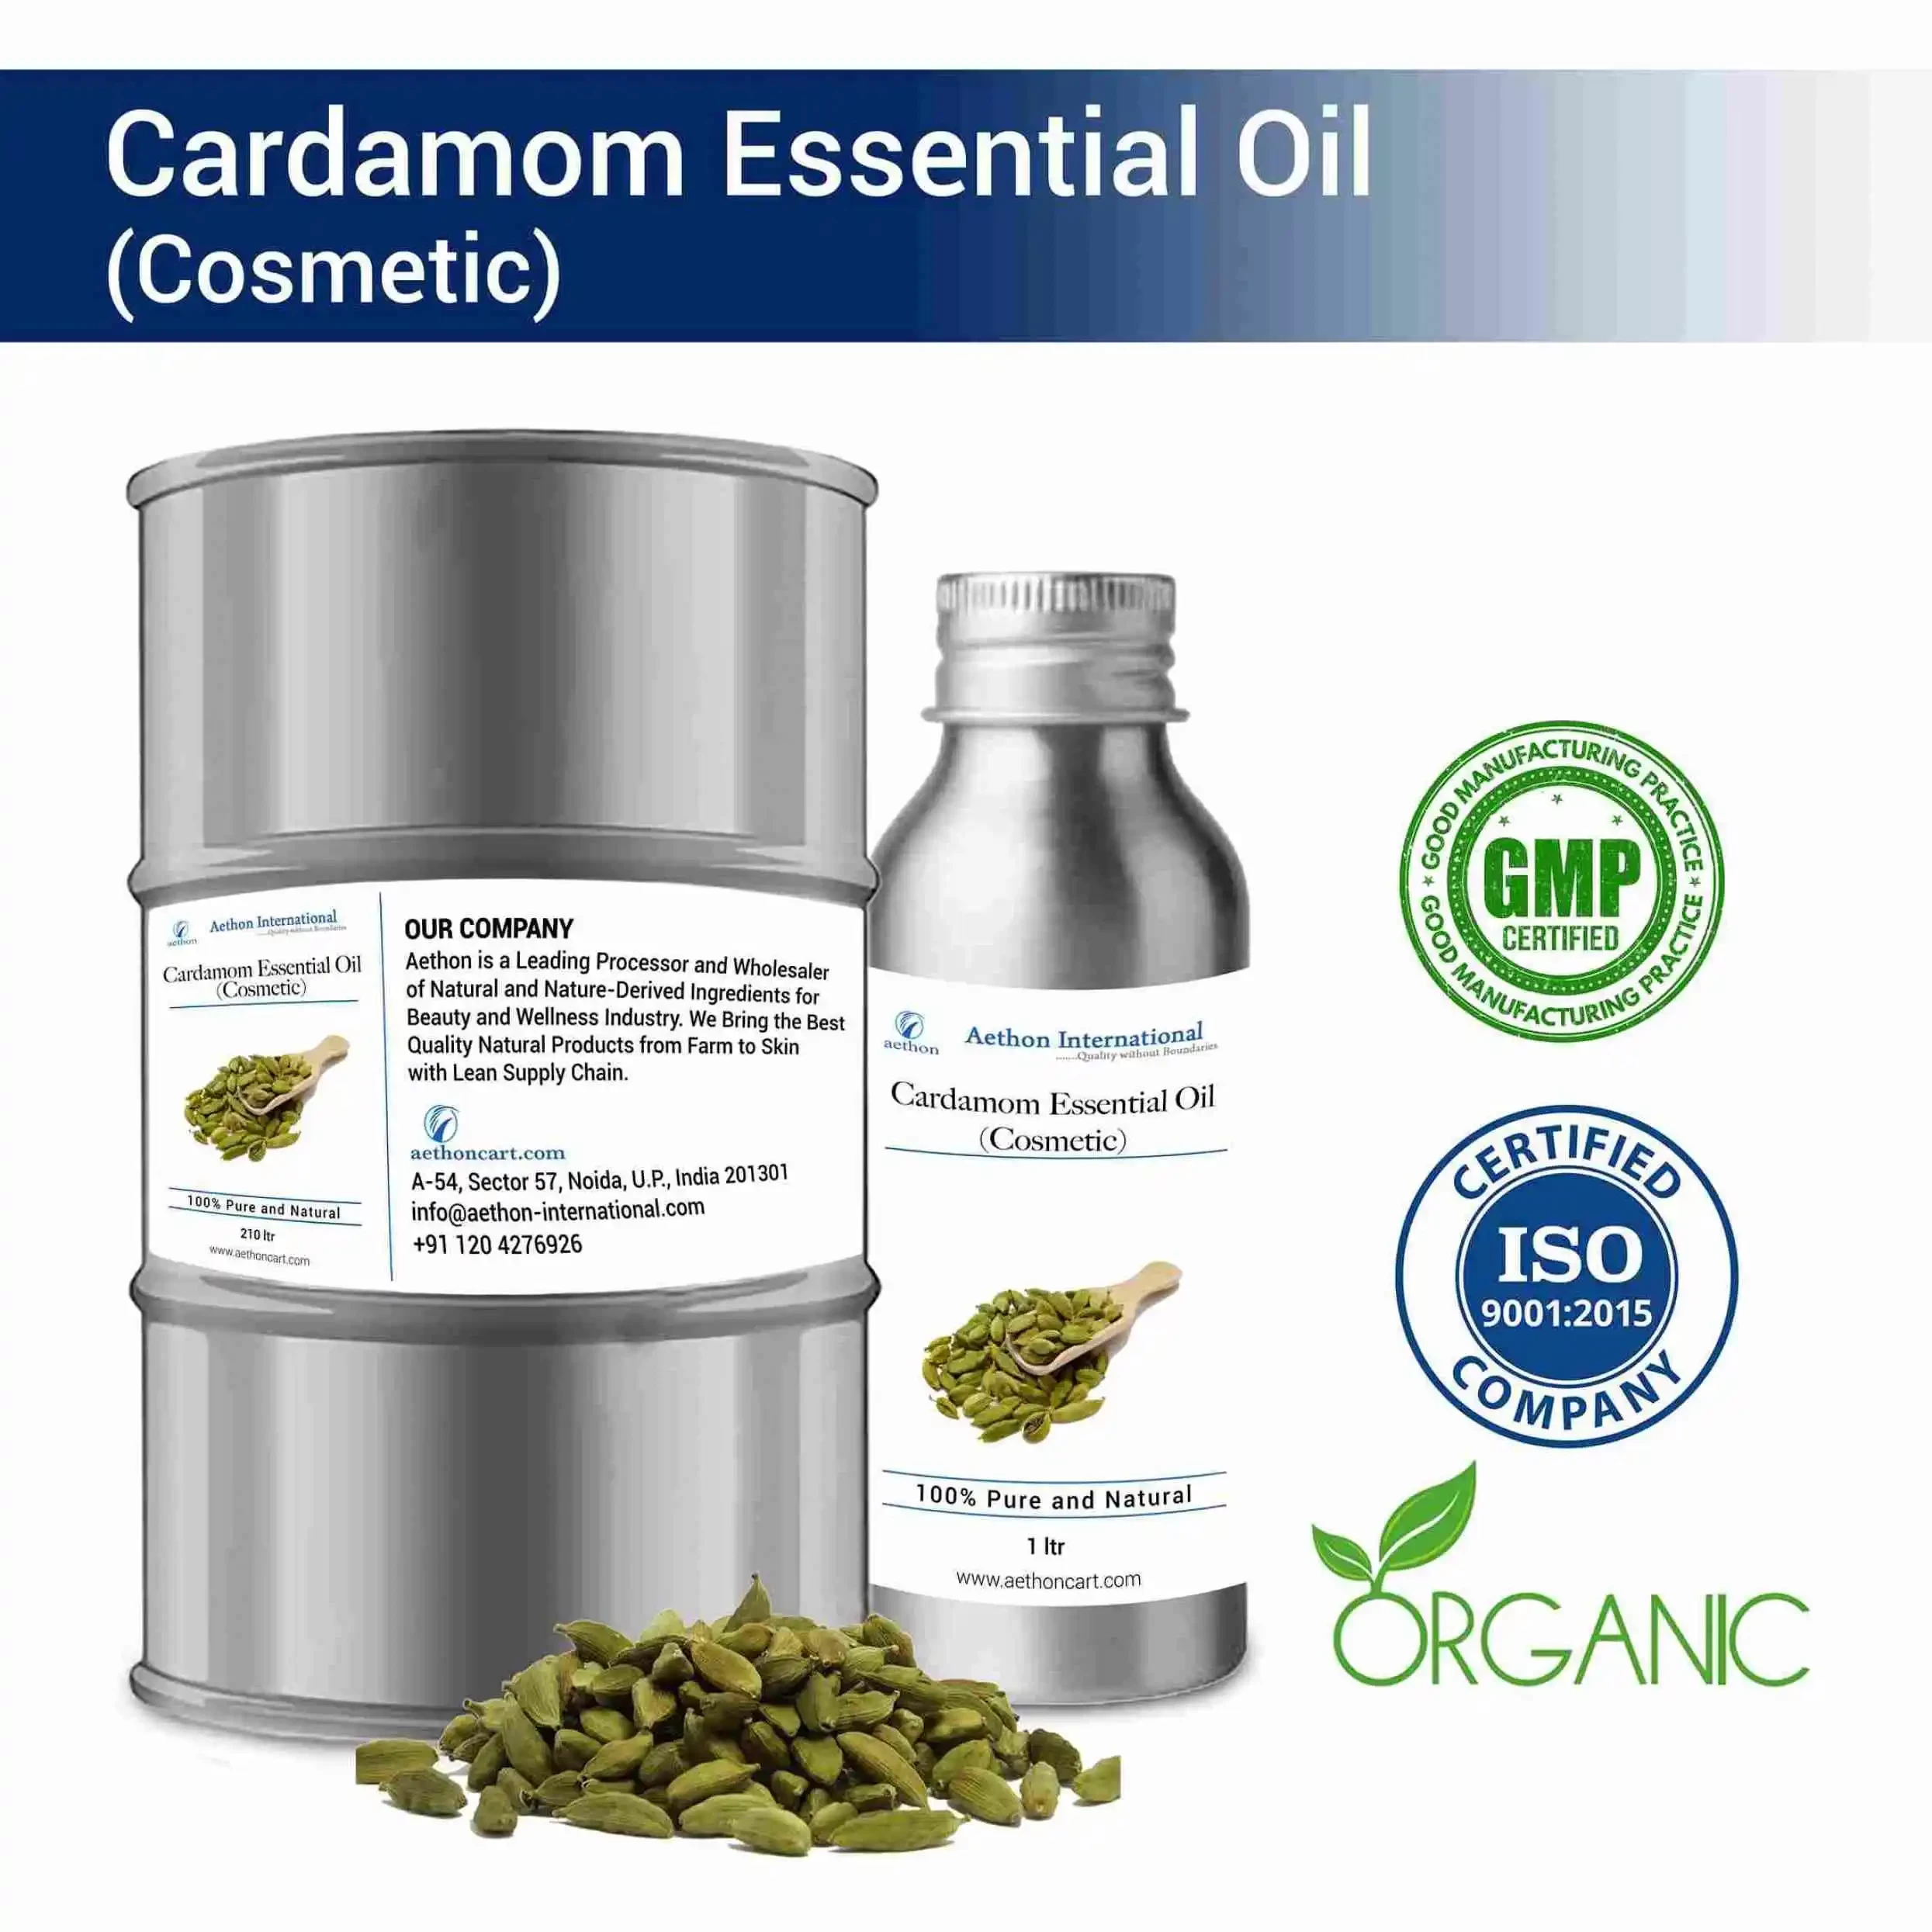 Cardamom Essential Oil (Cosmetic)